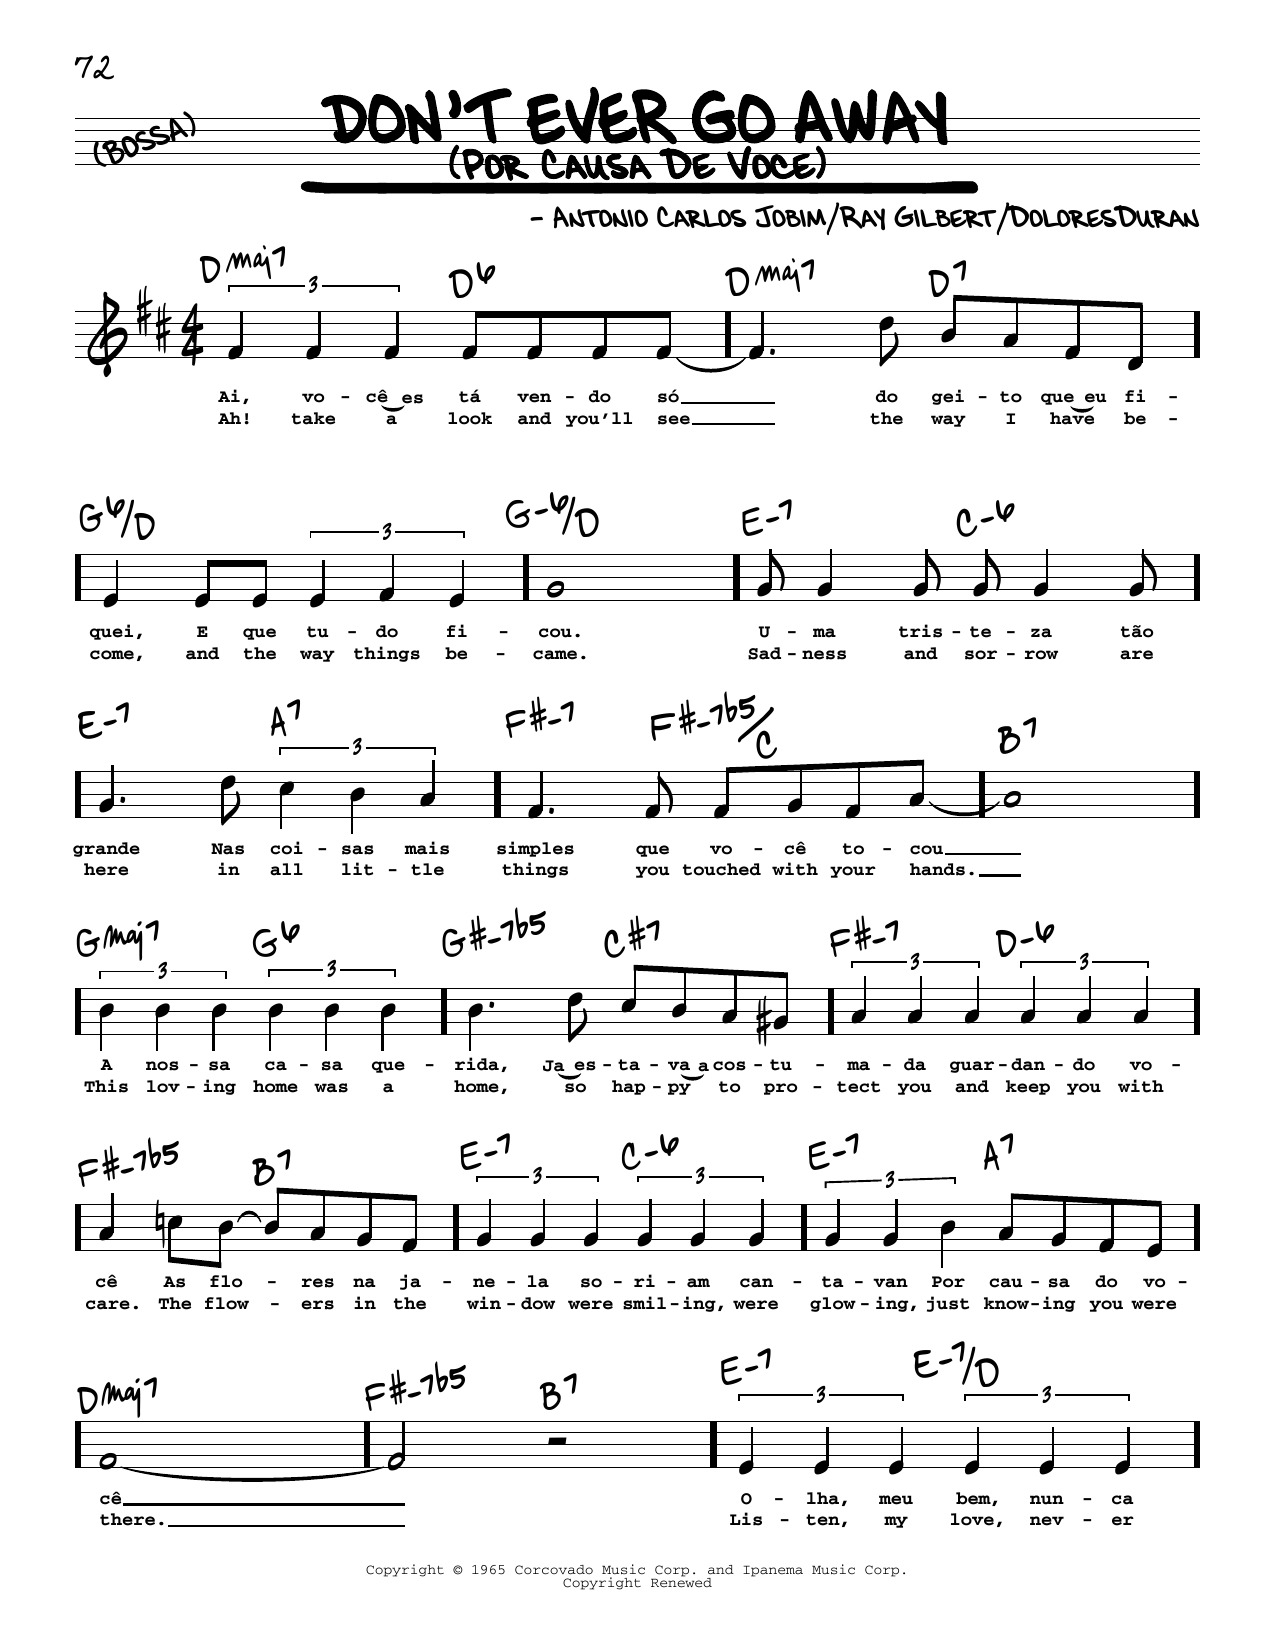 Antonio Carlos Jobim Don't Ever Go Away (Por Causa De Voce) (High Voice) Sheet Music Notes & Chords for Real Book – Melody, Lyrics & Chords - Download or Print PDF